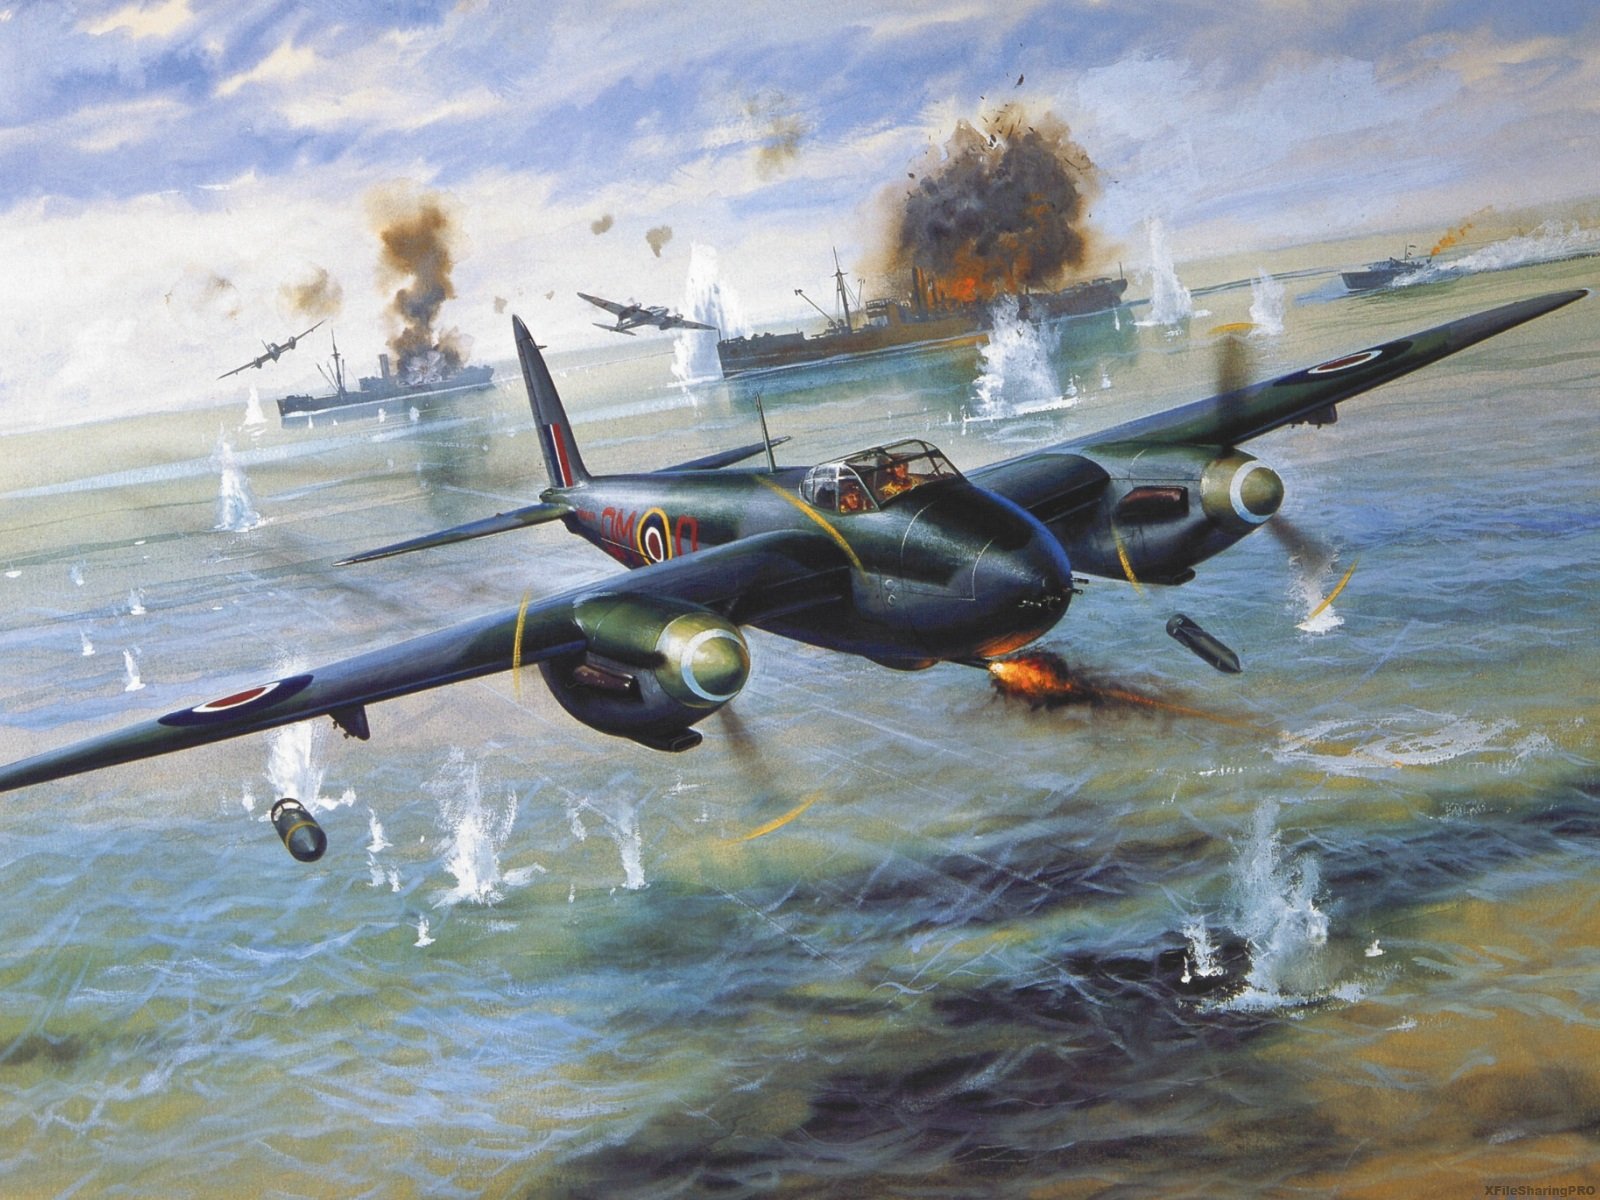 Aero Club Tornquist: Dibujos de aviones de la WWII